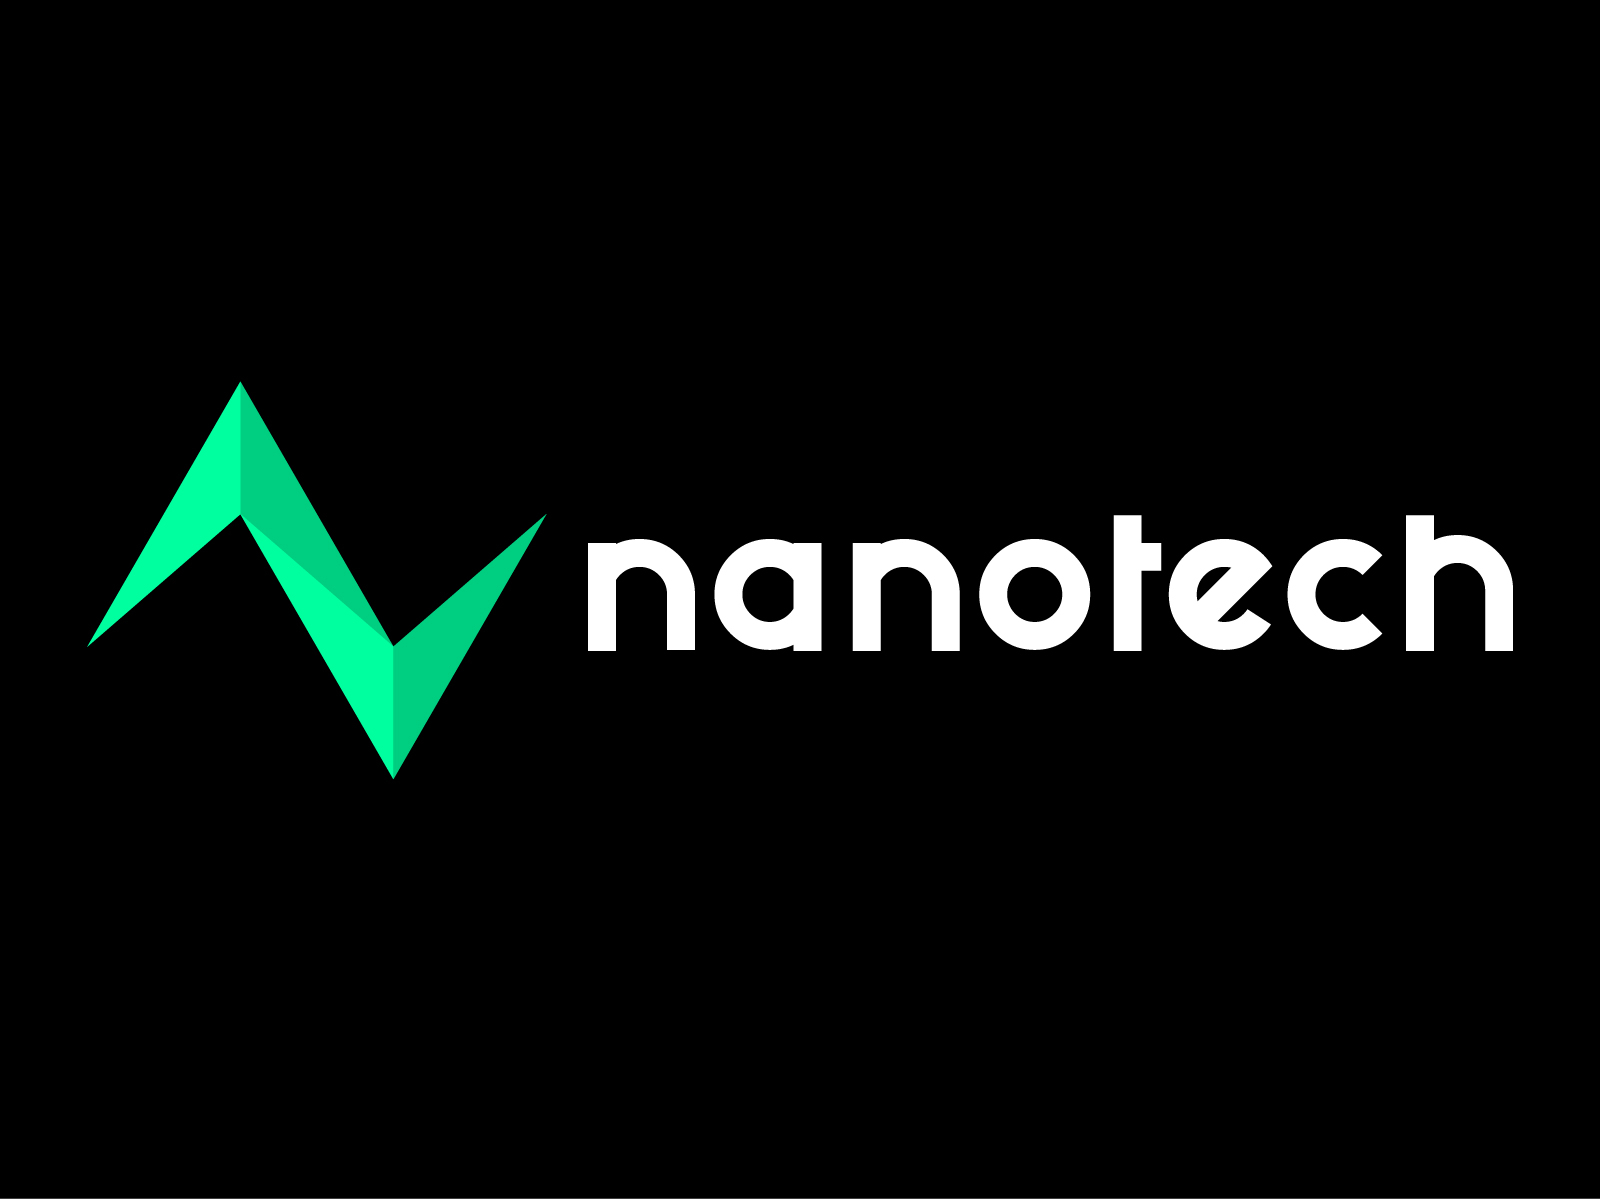 Nanotech logo black by kenniz_design on Dribbble